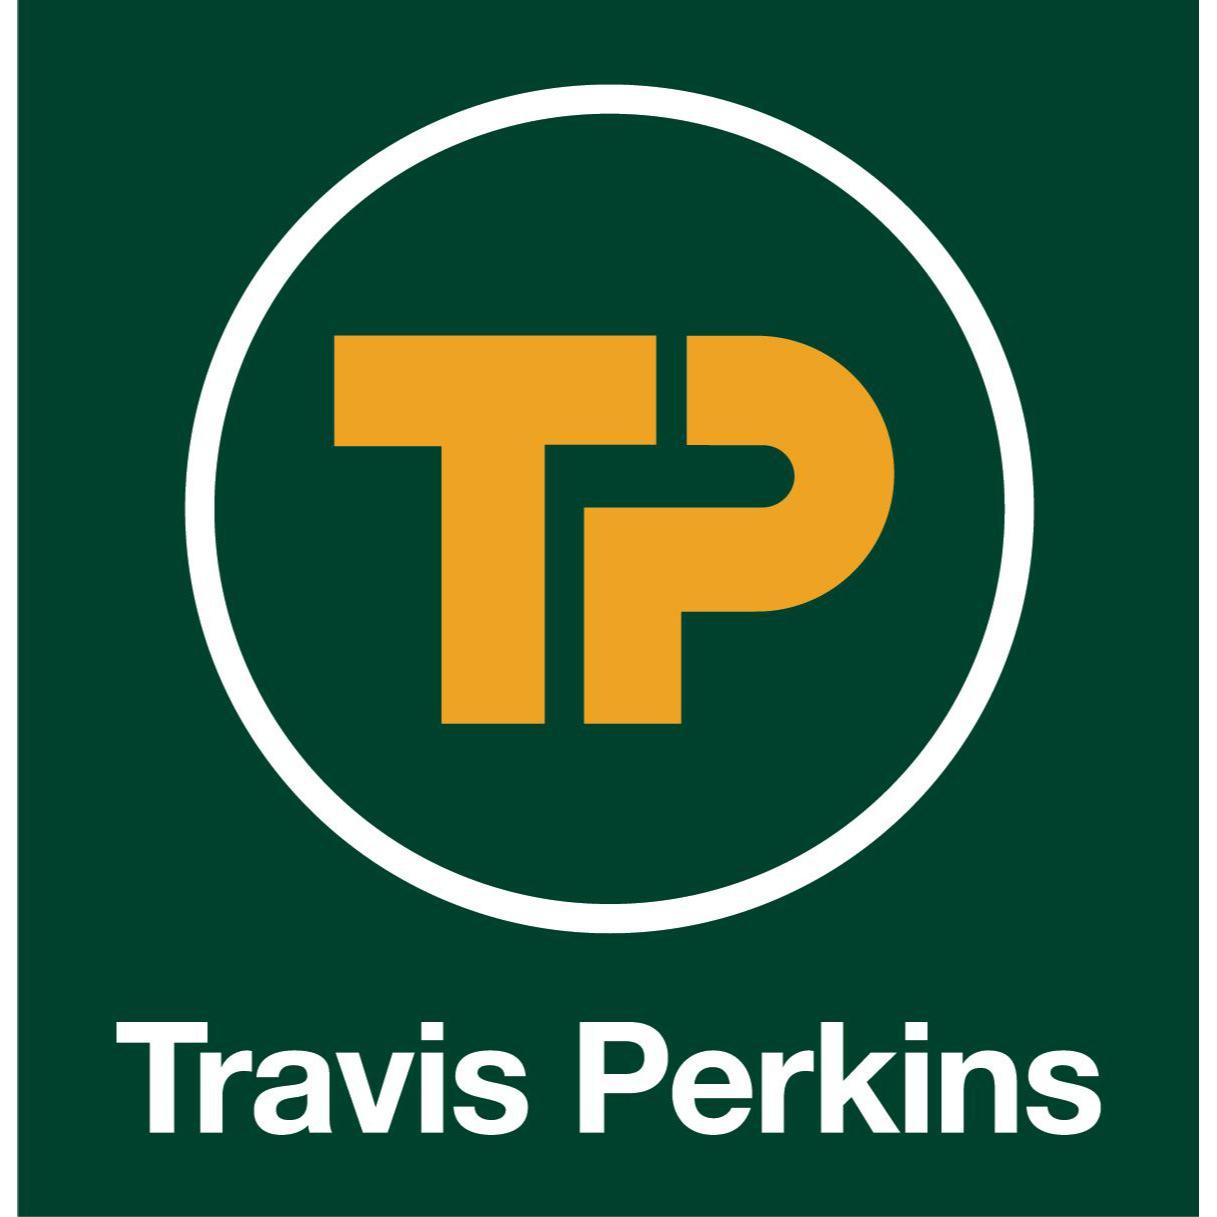 Travis Perkins Travis Perkins Blackpool 01253 300006